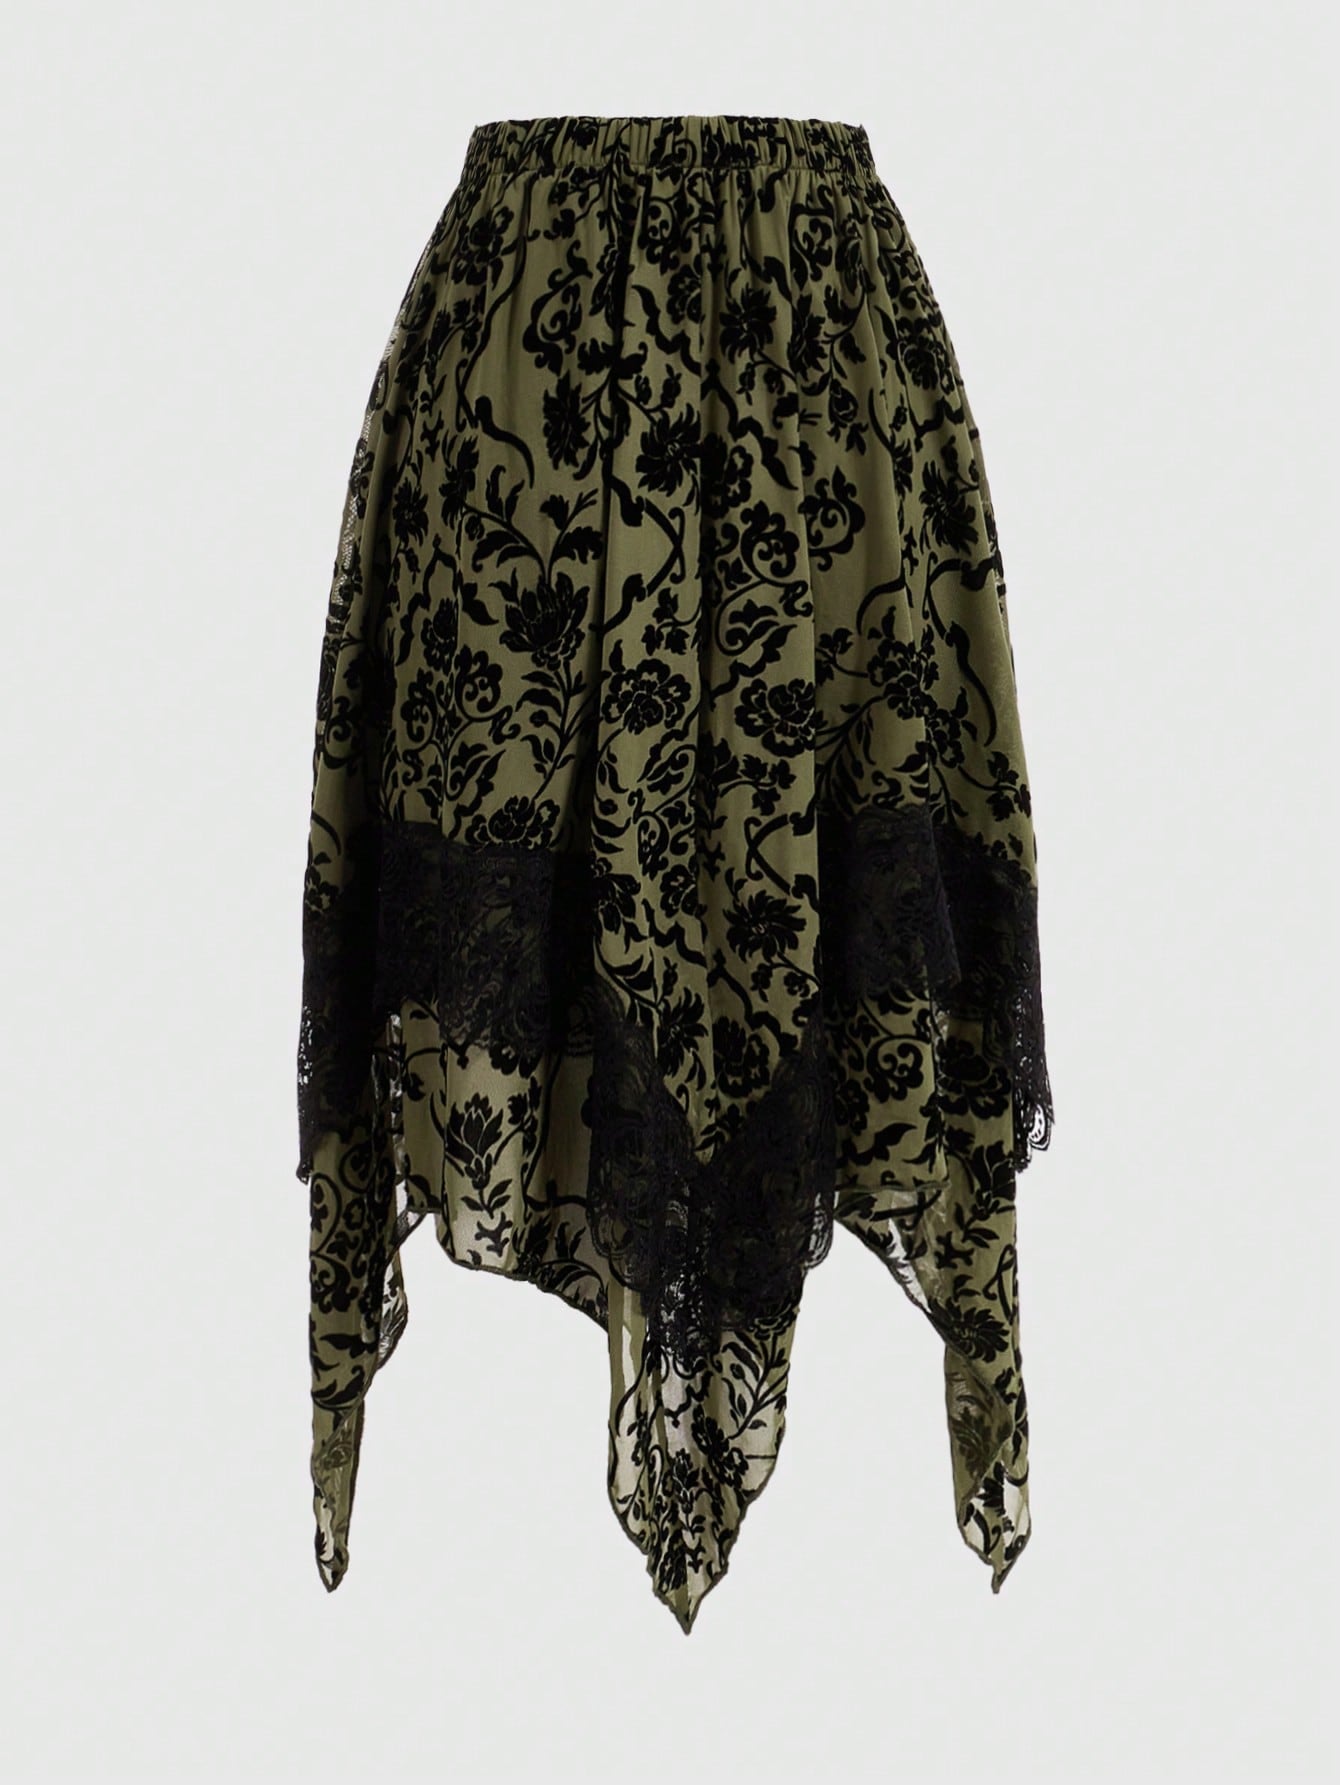 Pixie Fashion Hippie Baroque Print Contrast Lace Hanky Hem Skirt